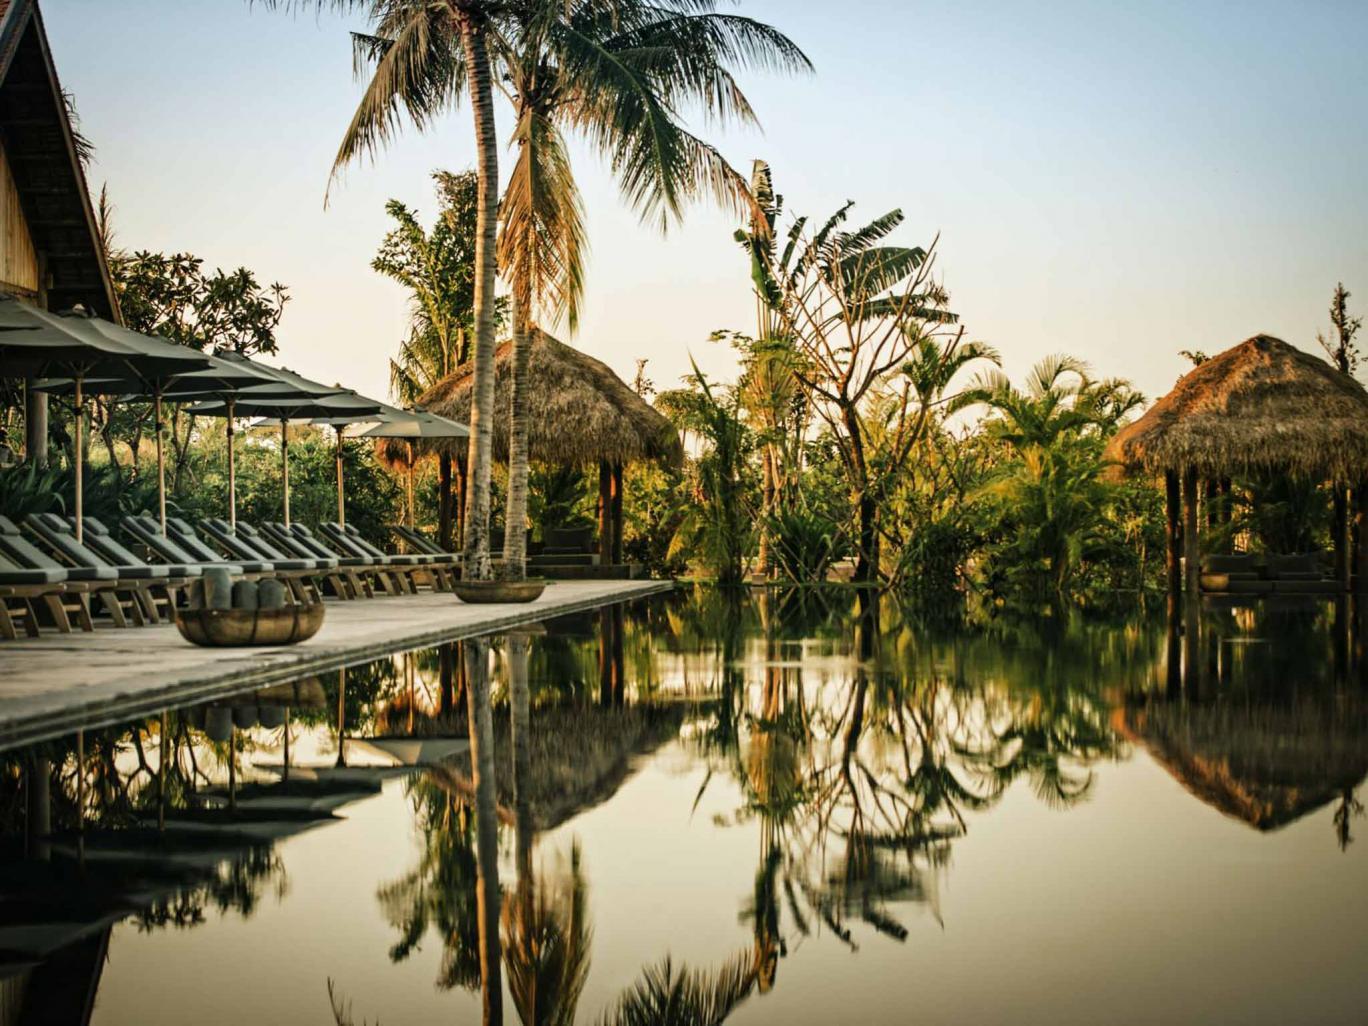 Just outside of busy Siem Reap, Phum Baitang offers luxury stilt houses